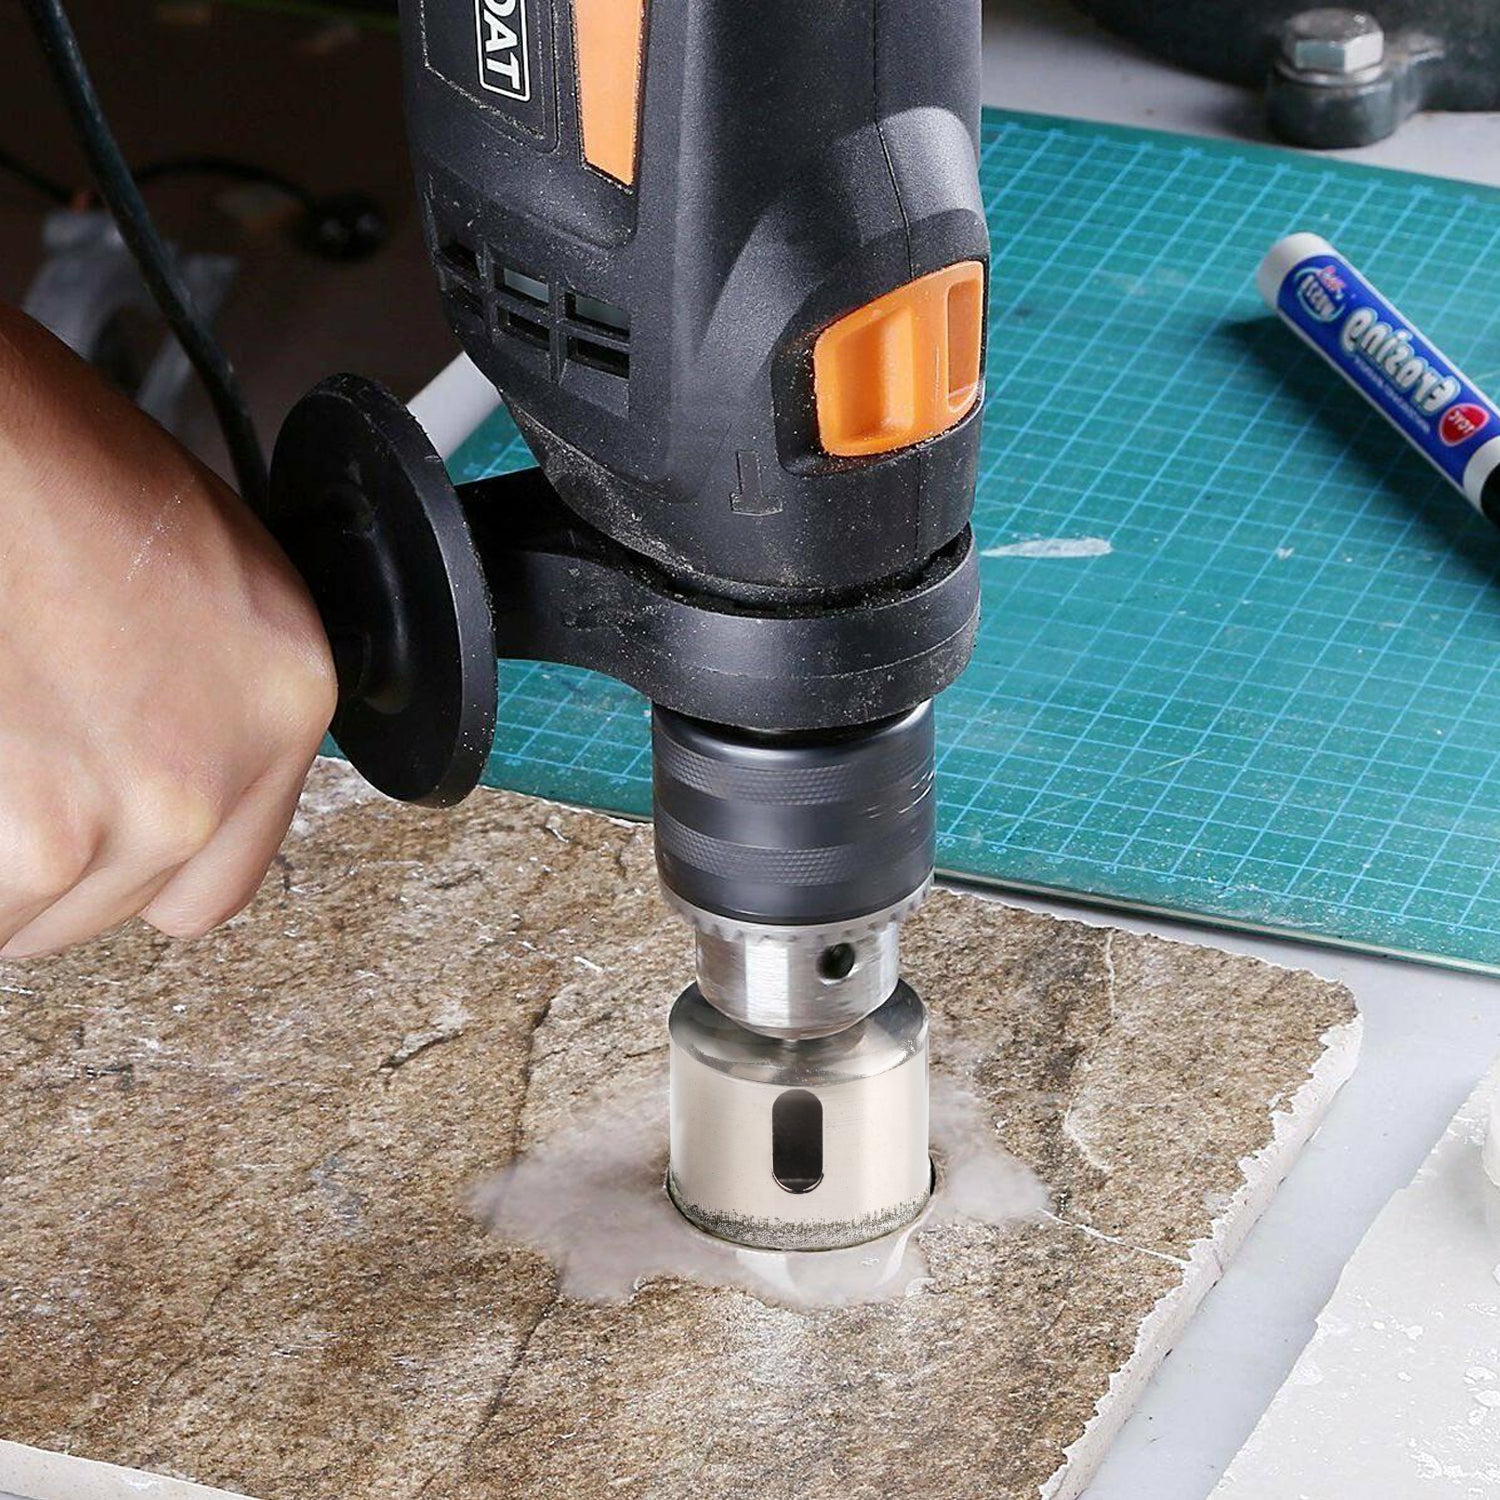 45mm Diamond Hole Saw Kit Tile Drill Bits for Ceramic, Glass, Tile, Porcelain, Marble, Granite